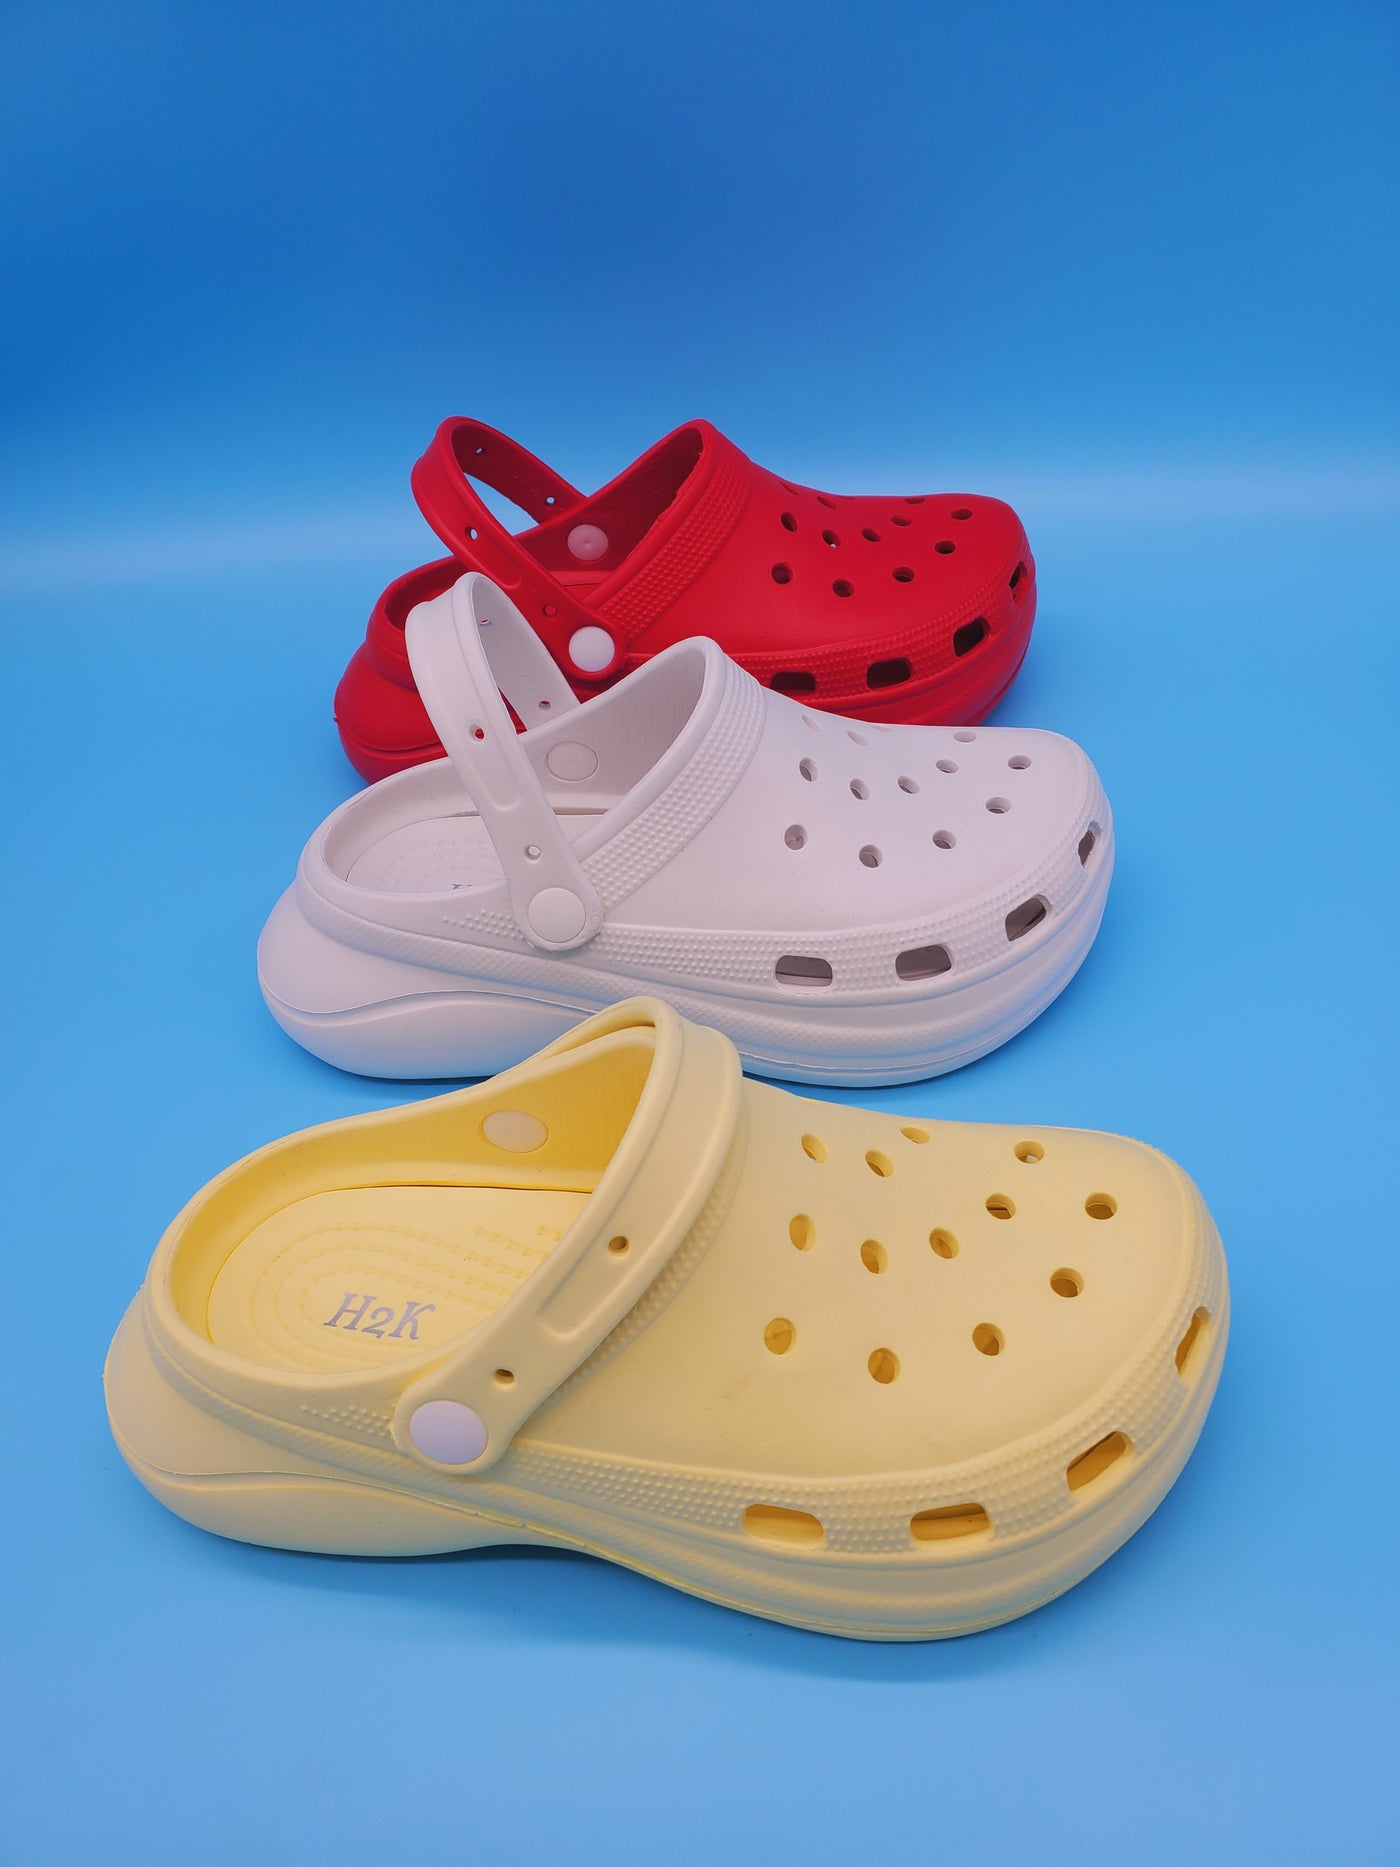 Crocs like Deeply Cushion Sandals